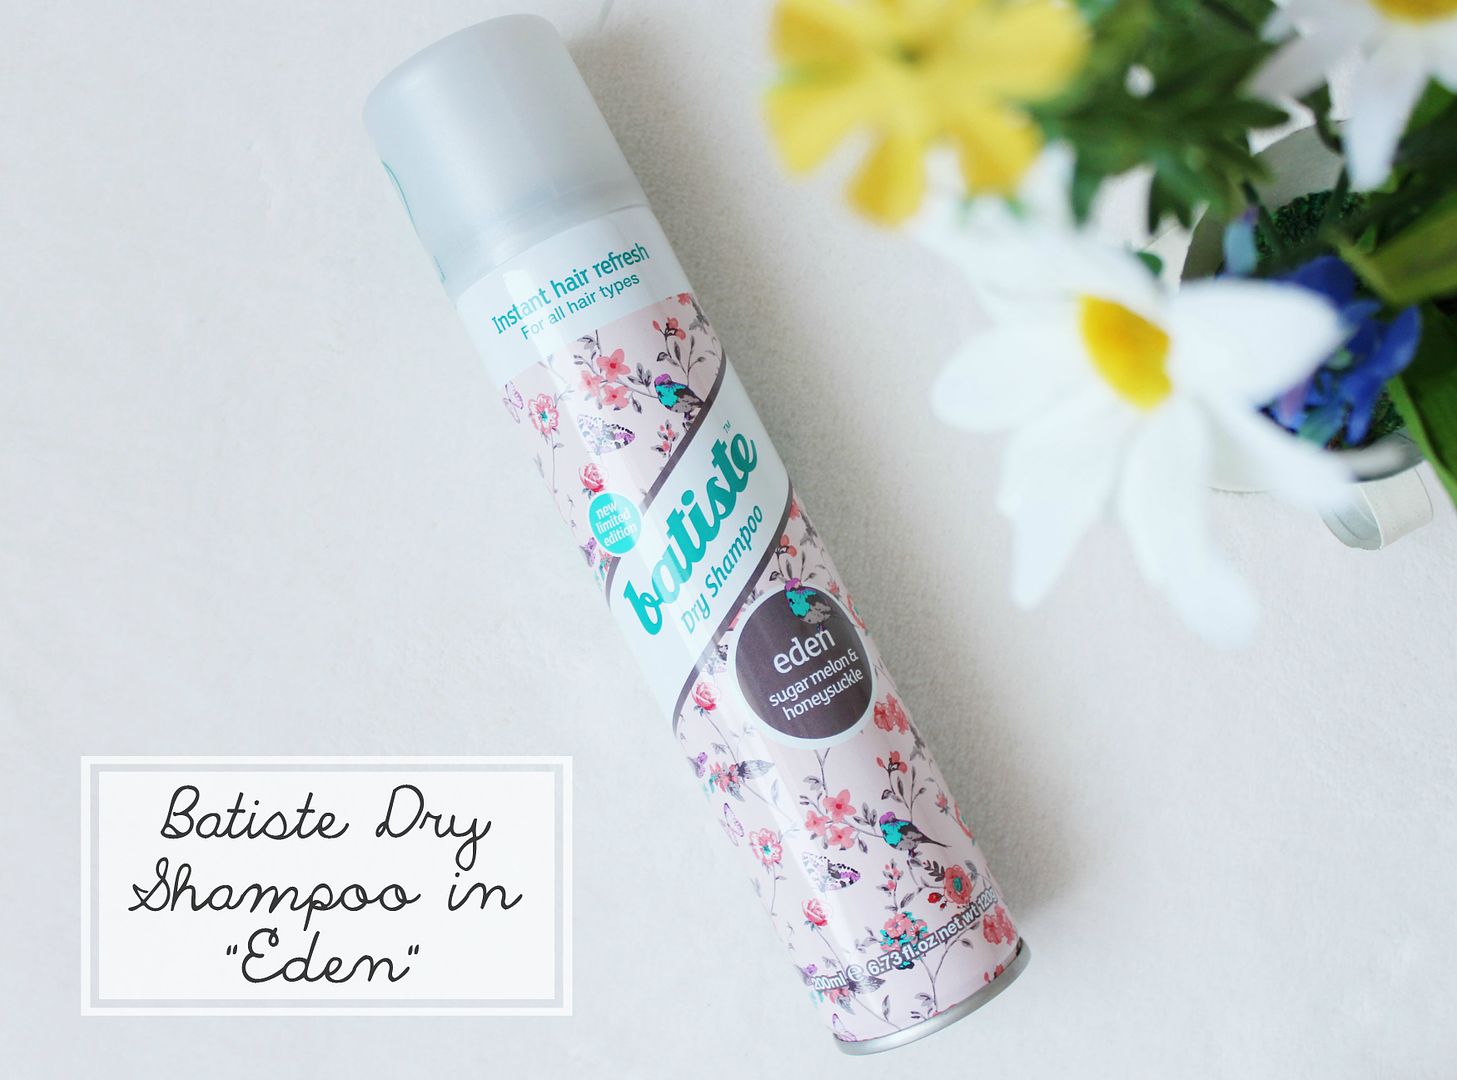 Batiste-Dry-Shampoo-Eden-New-2015-Review-Belle-Amie-UK-Beauty-Fashion-Lifestyle-Blog